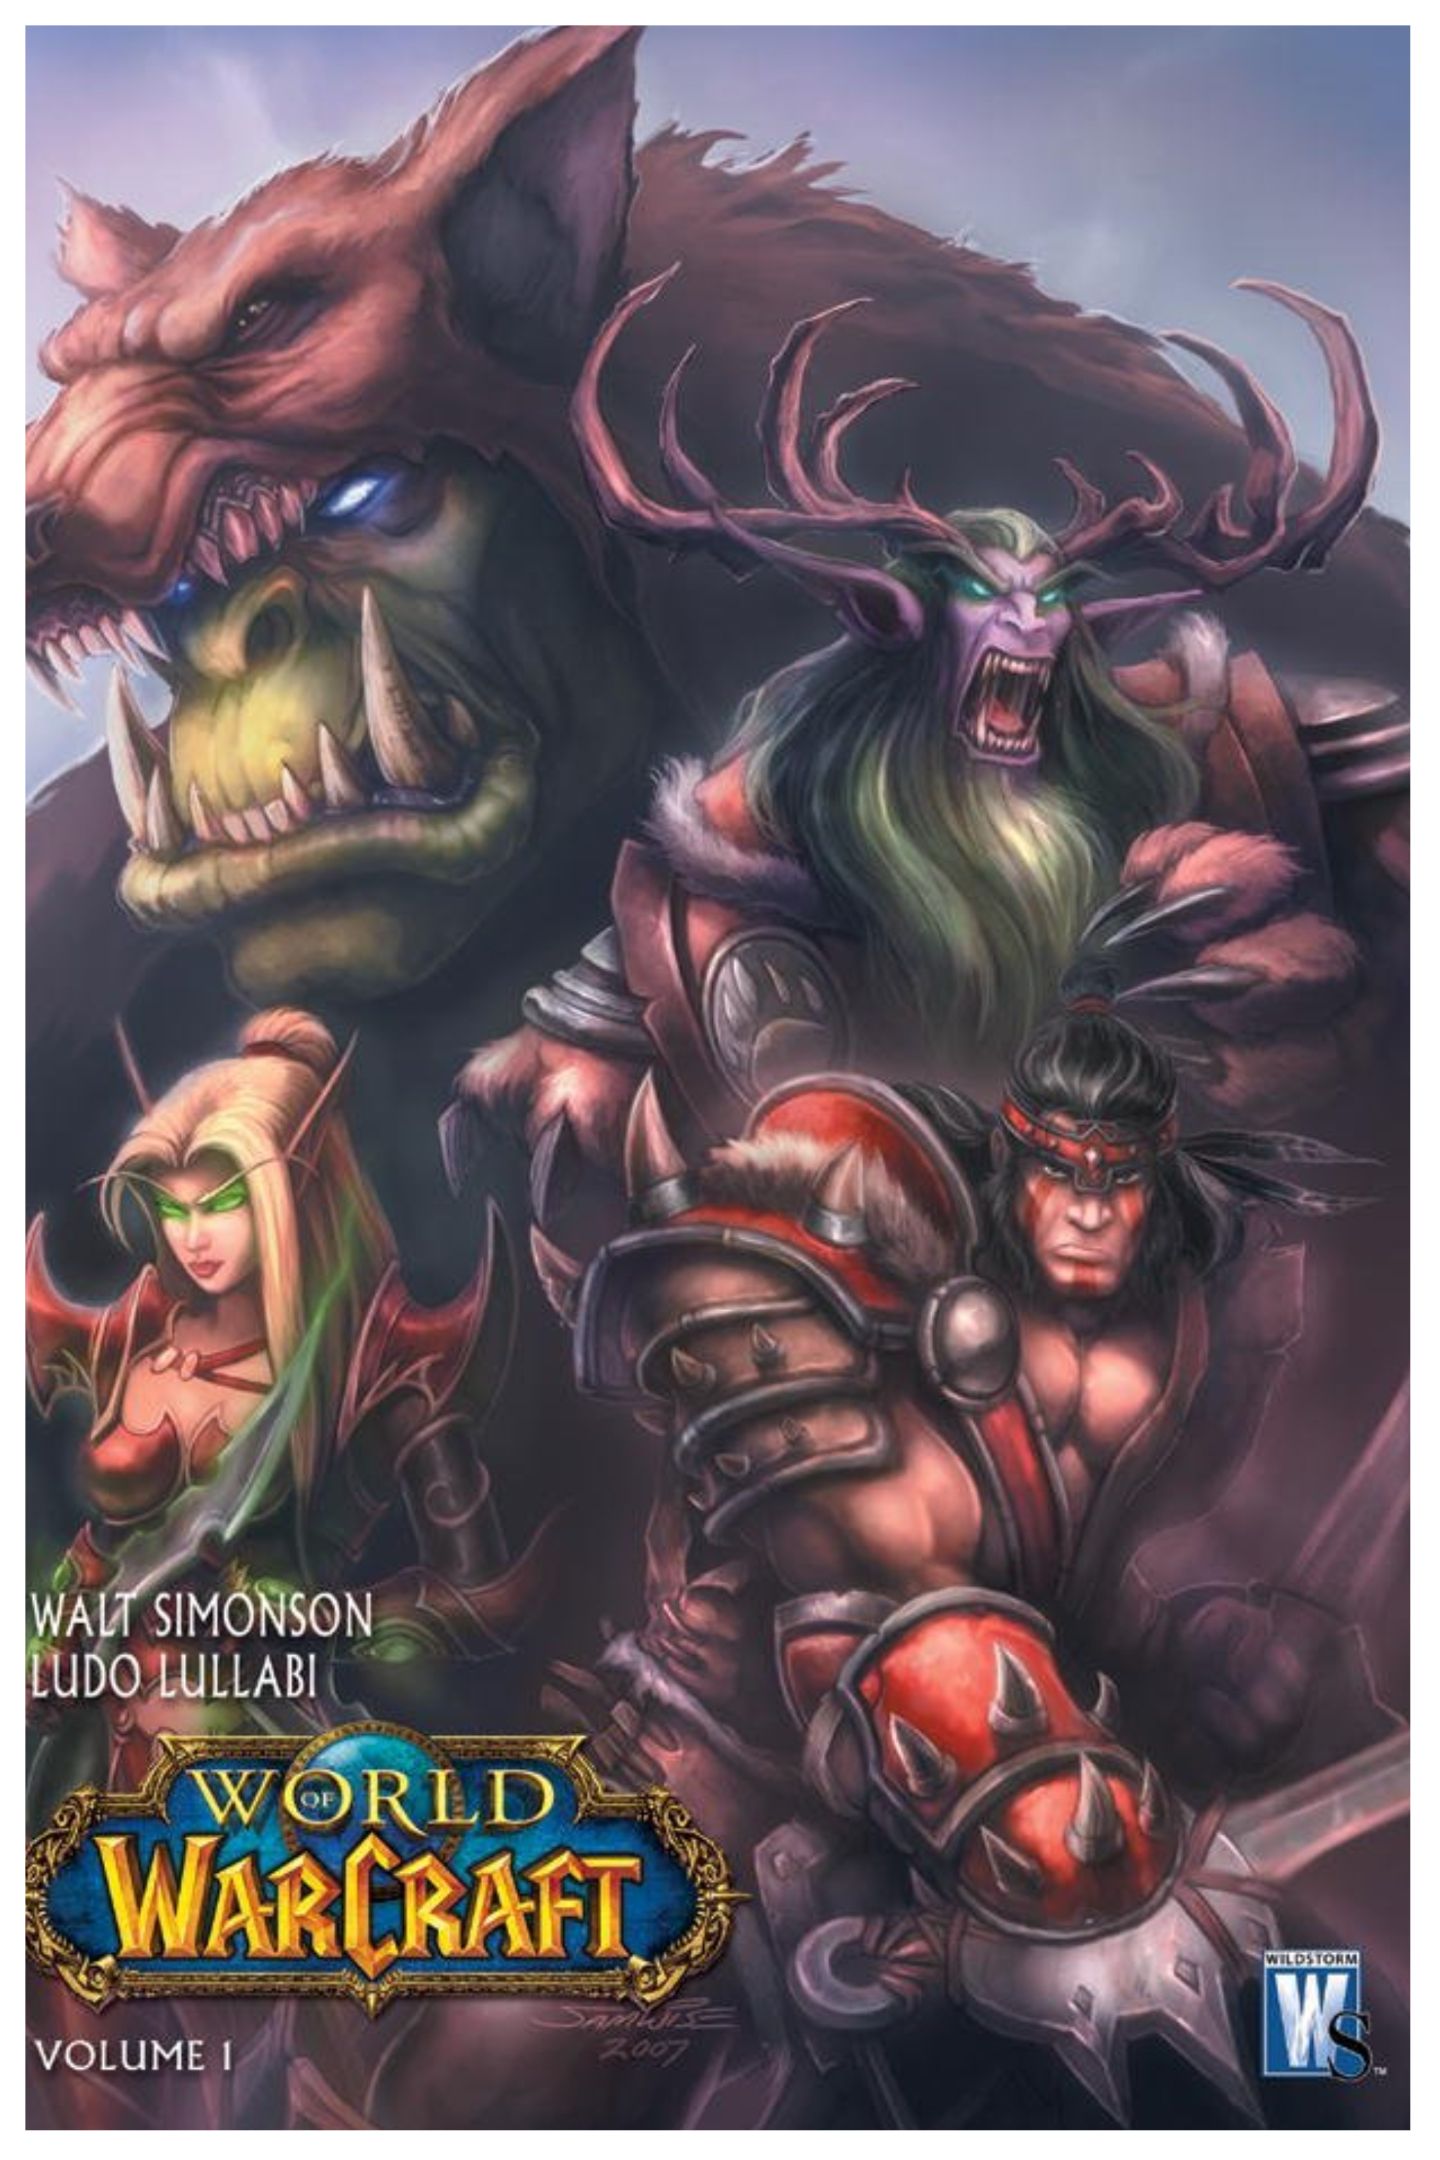 World of Warcraft Vol 1 comical